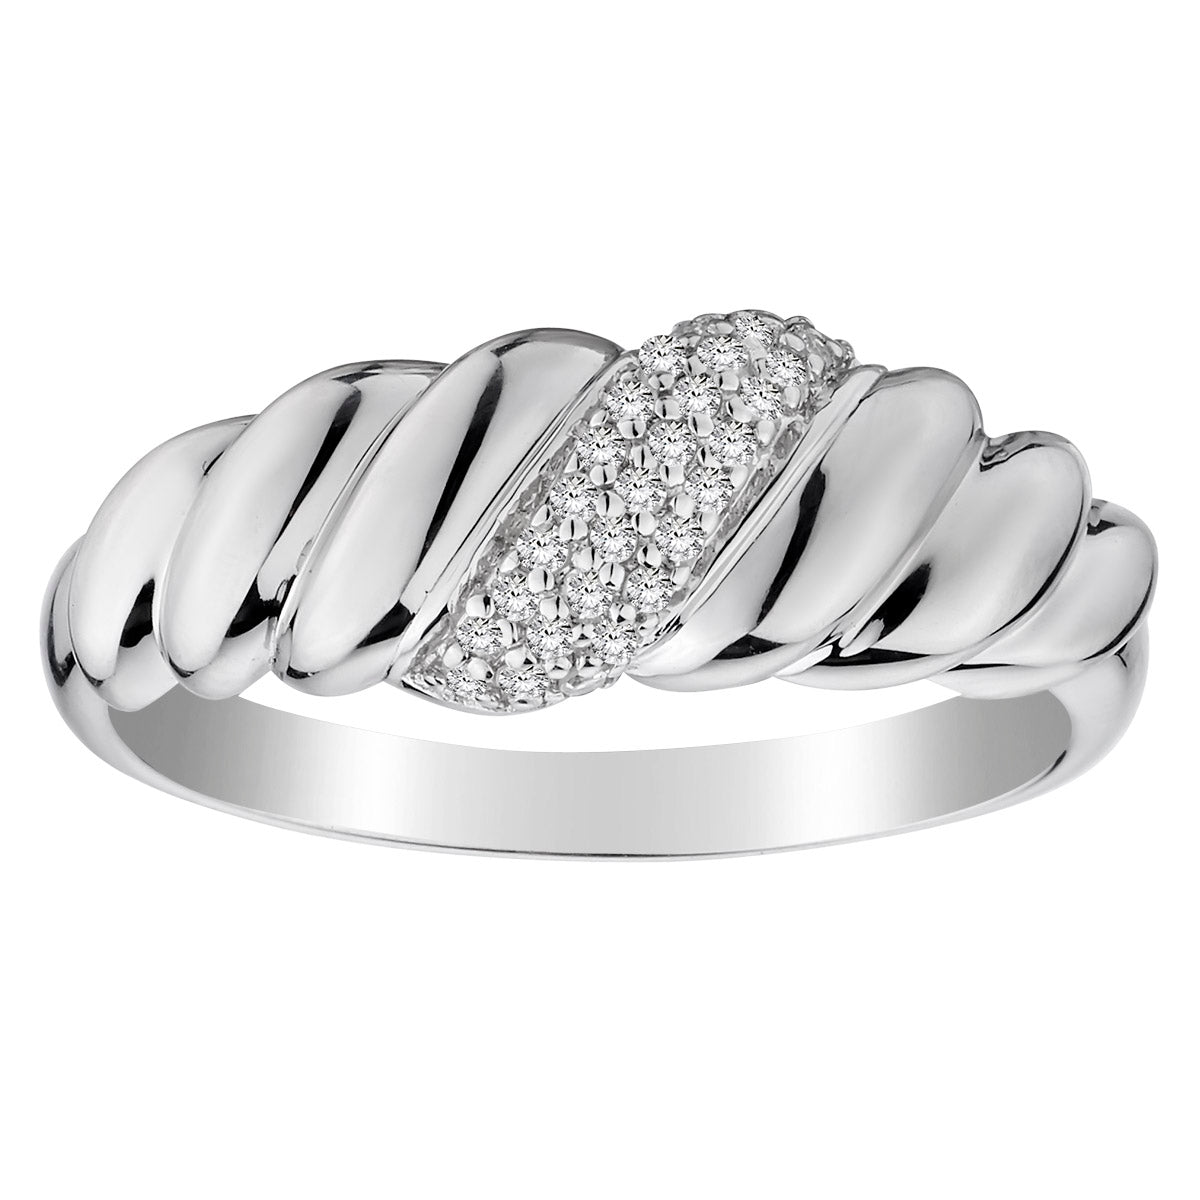 .15 Carat of Diamonds Ring, Silver......................NOW